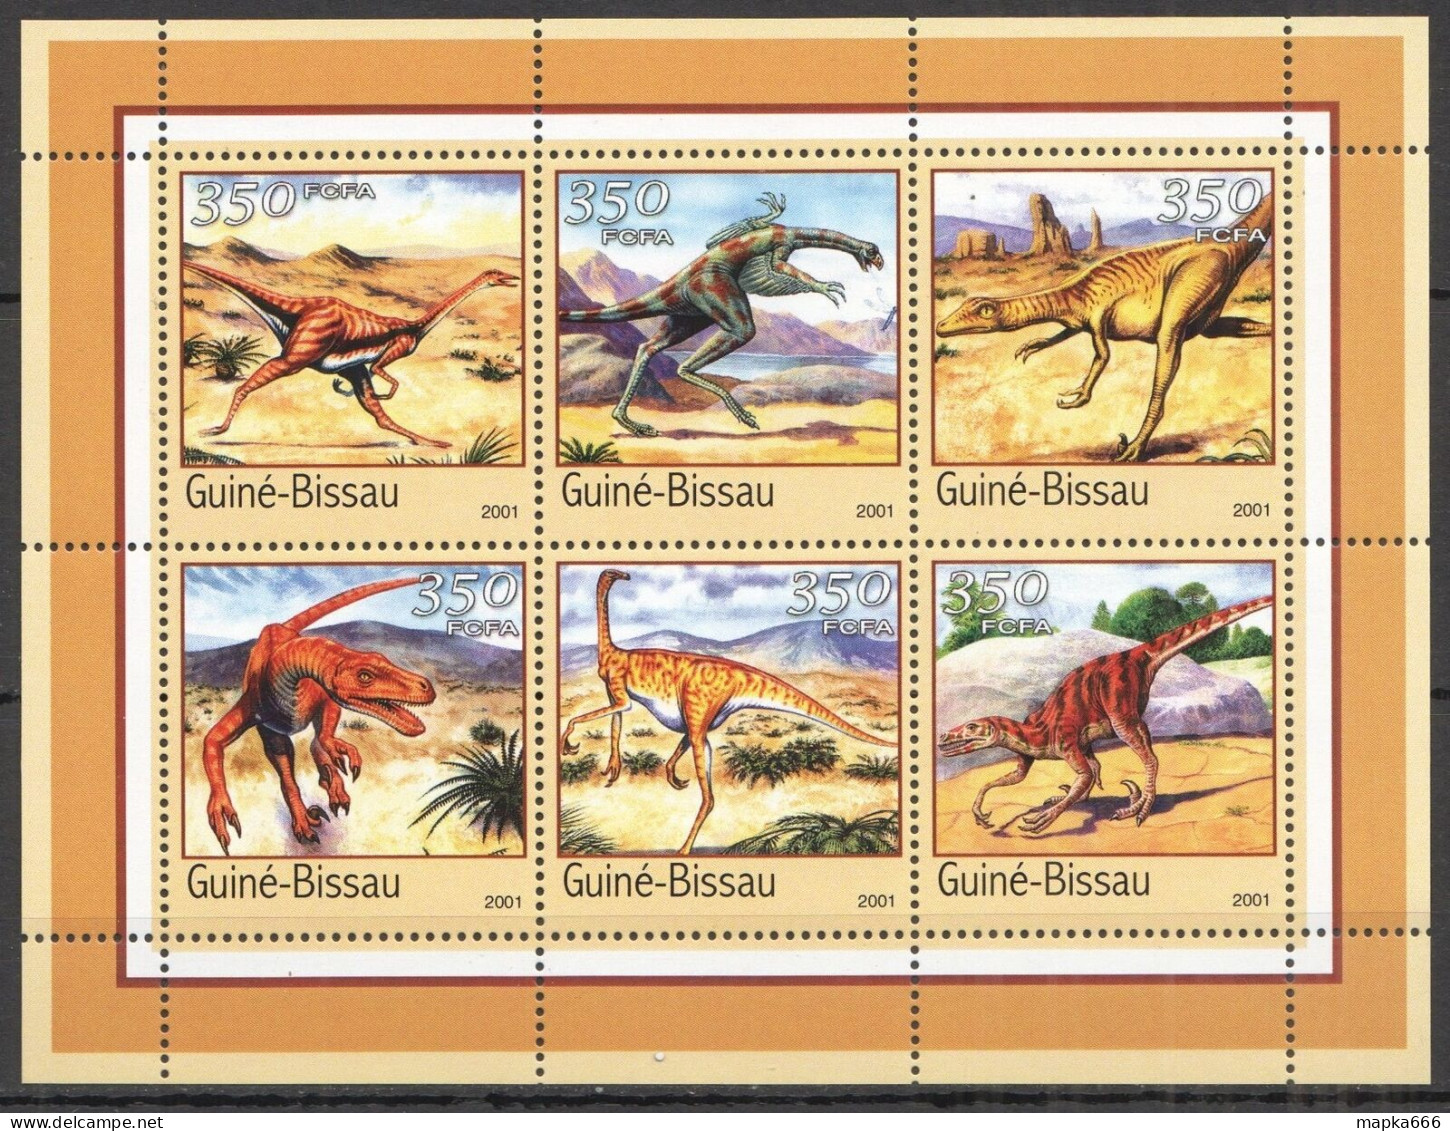 B1506 2001 Guinea-Bissau Fauna Prehistoric Animals Dinosaurs Kb Mnh - Prehistorisch